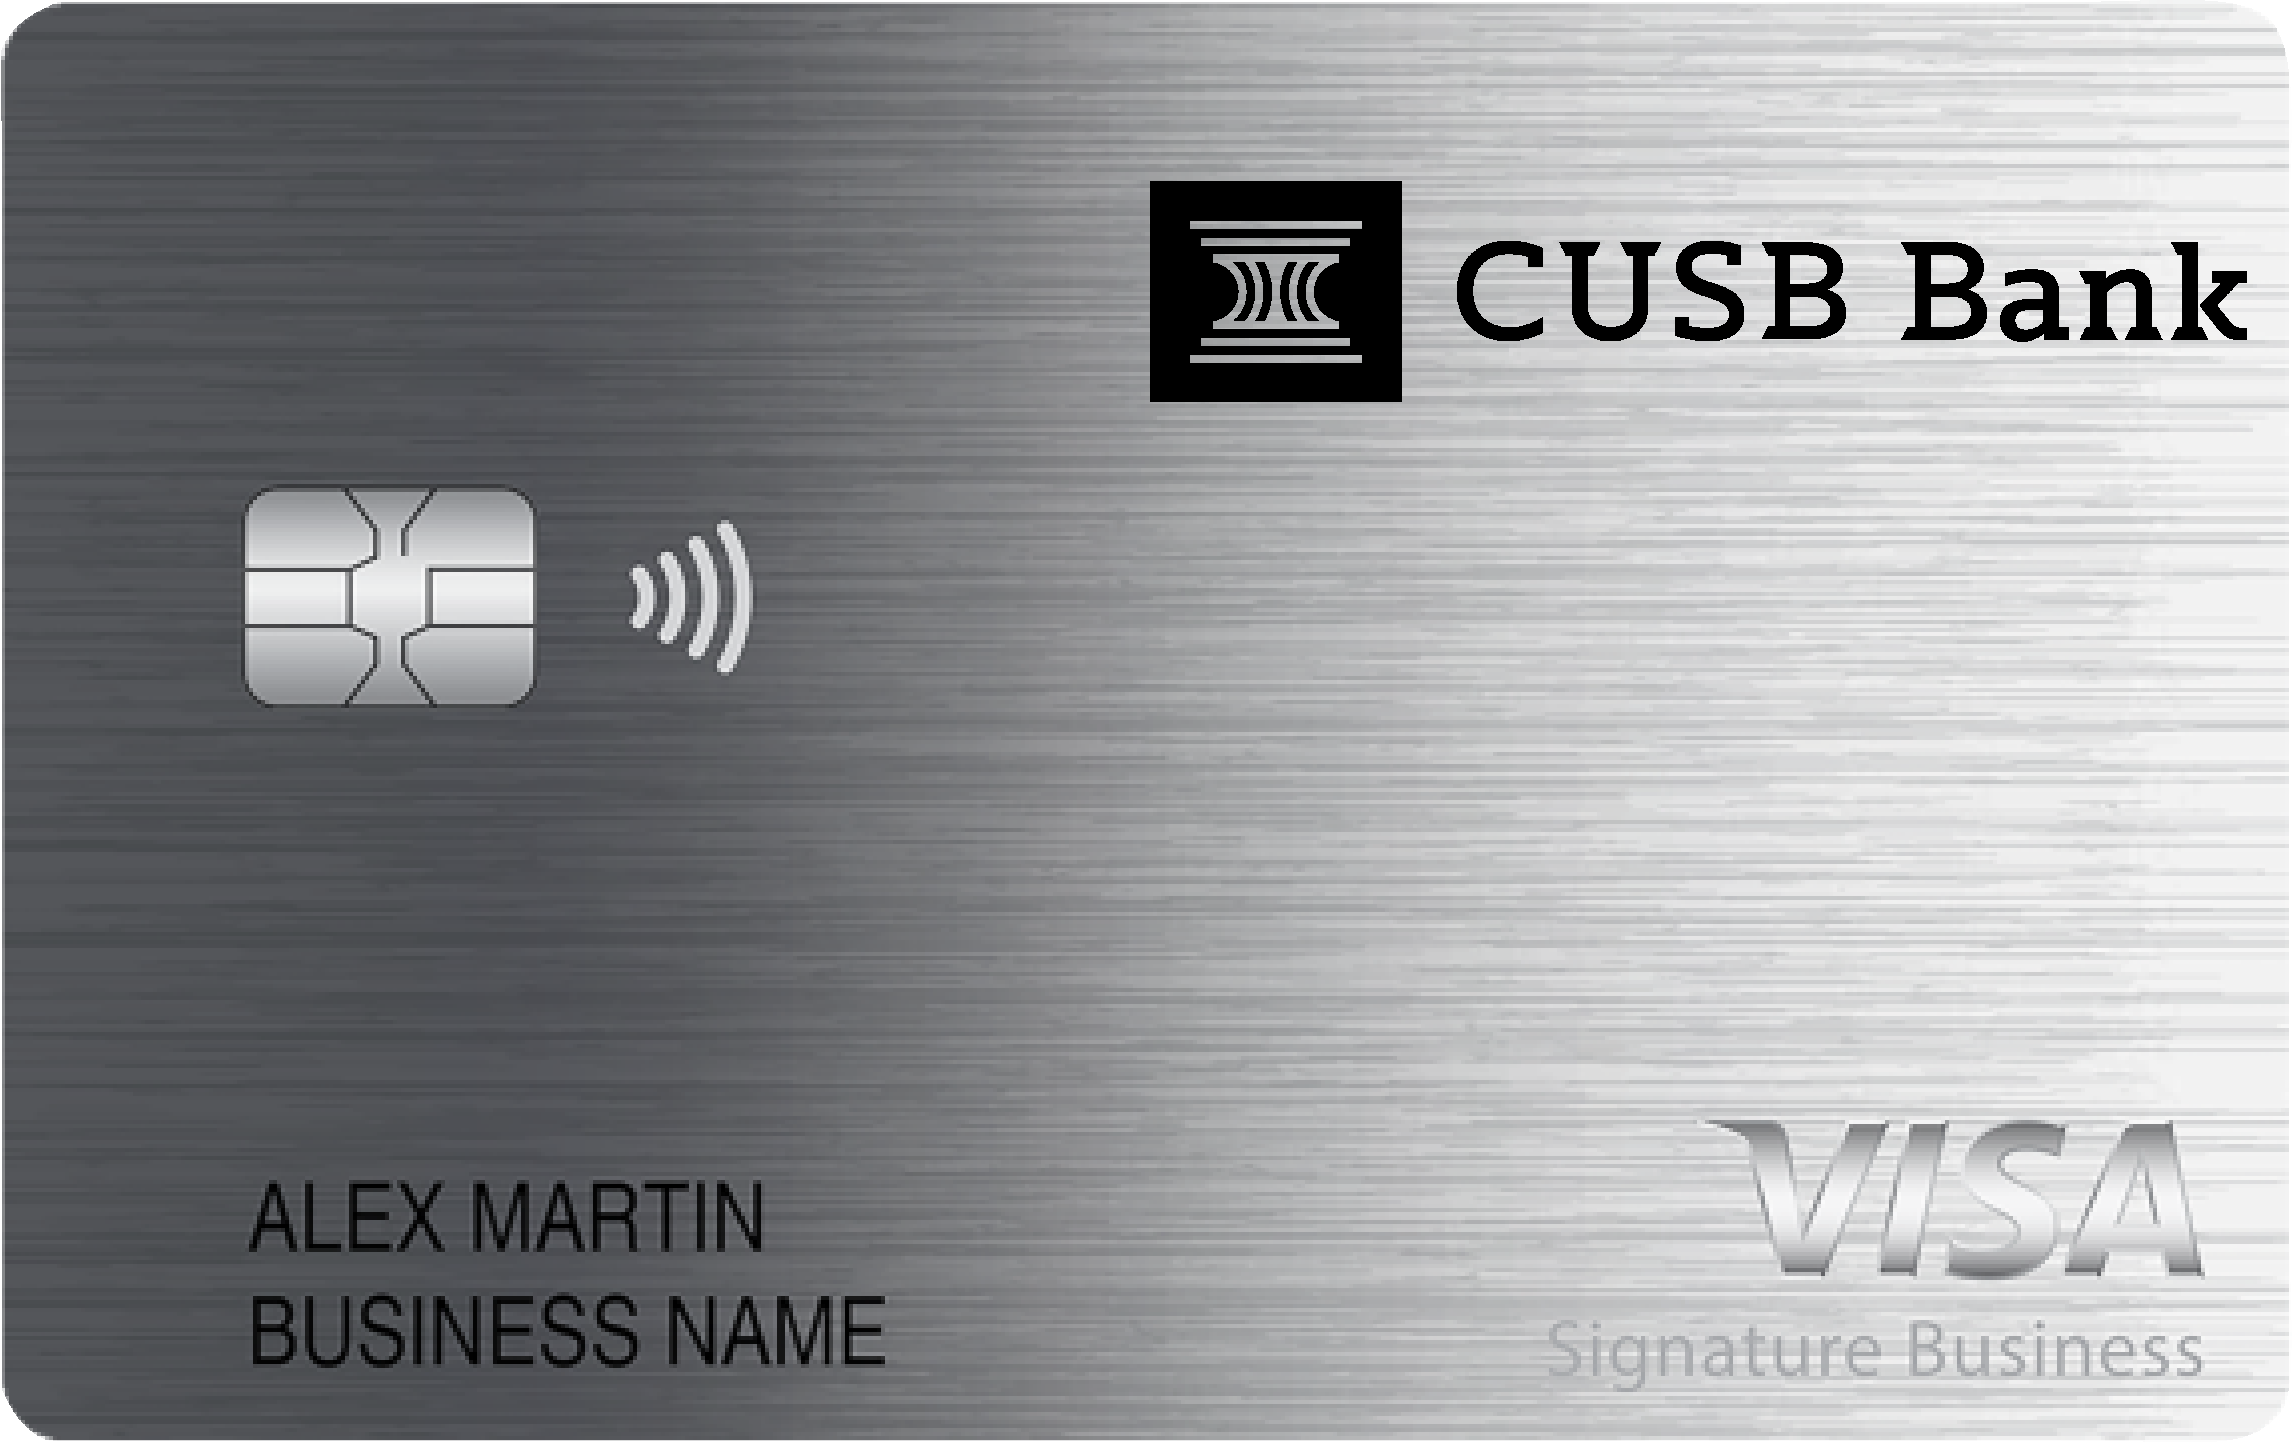 CUSB Bank Smart Business Rewards Card